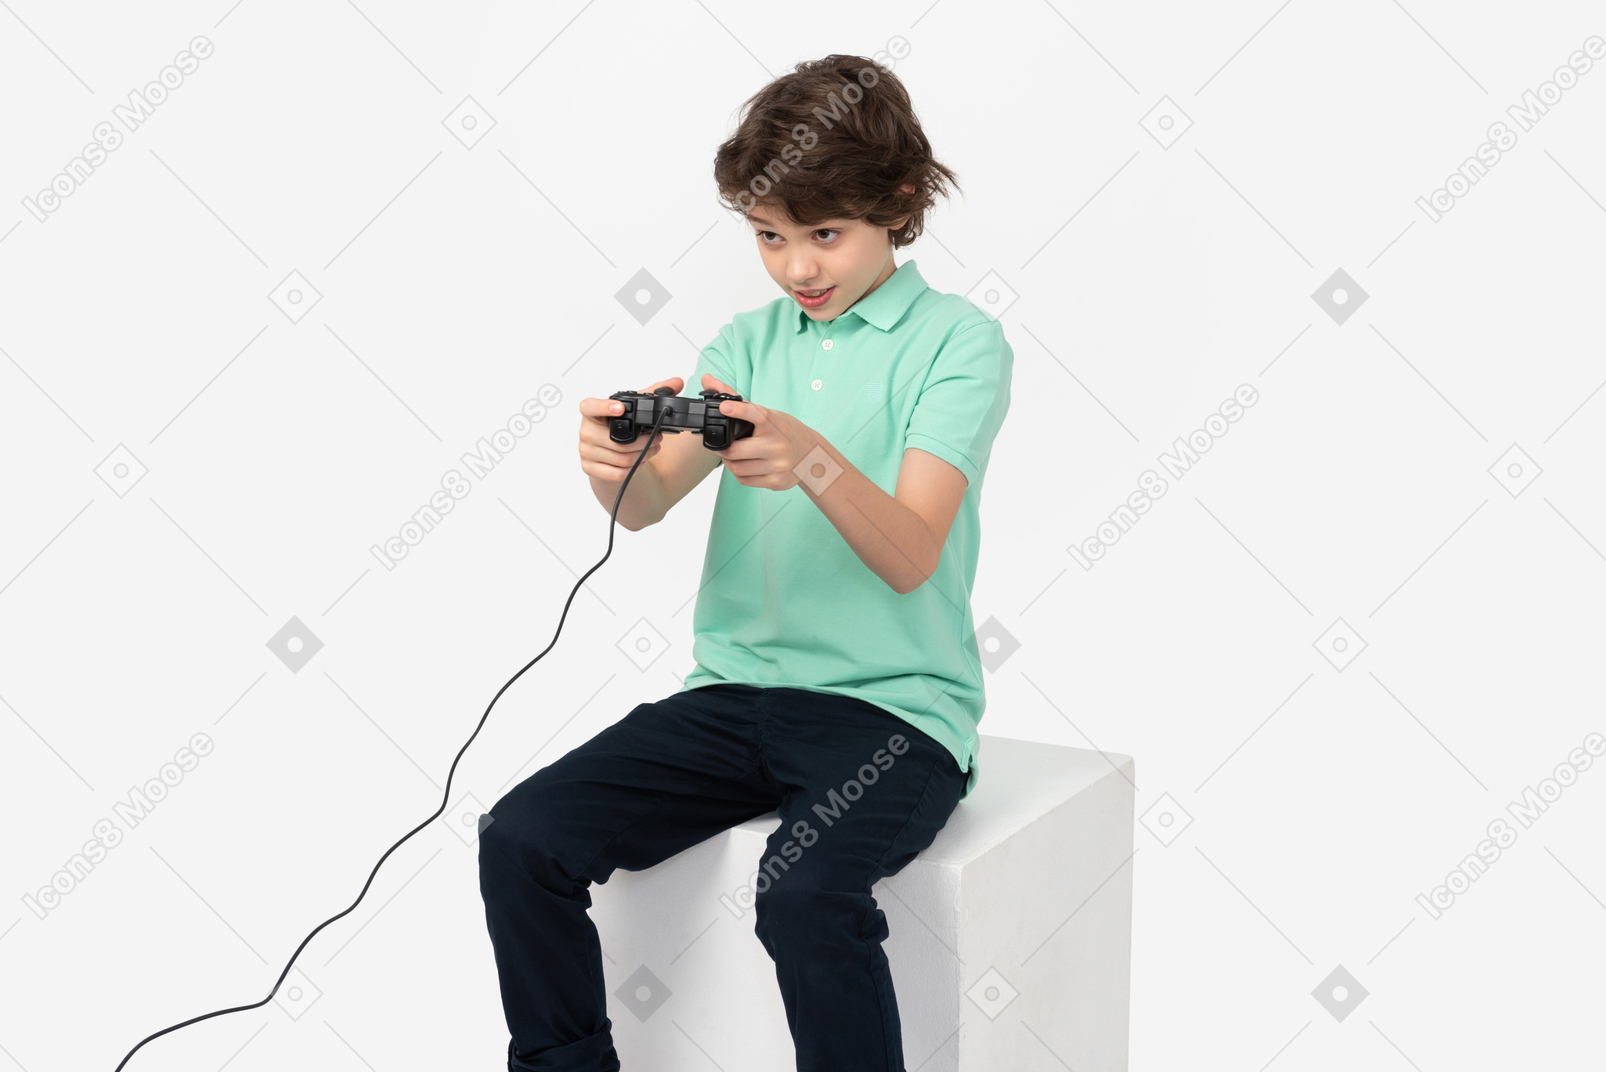 Focused teen boy playing video games